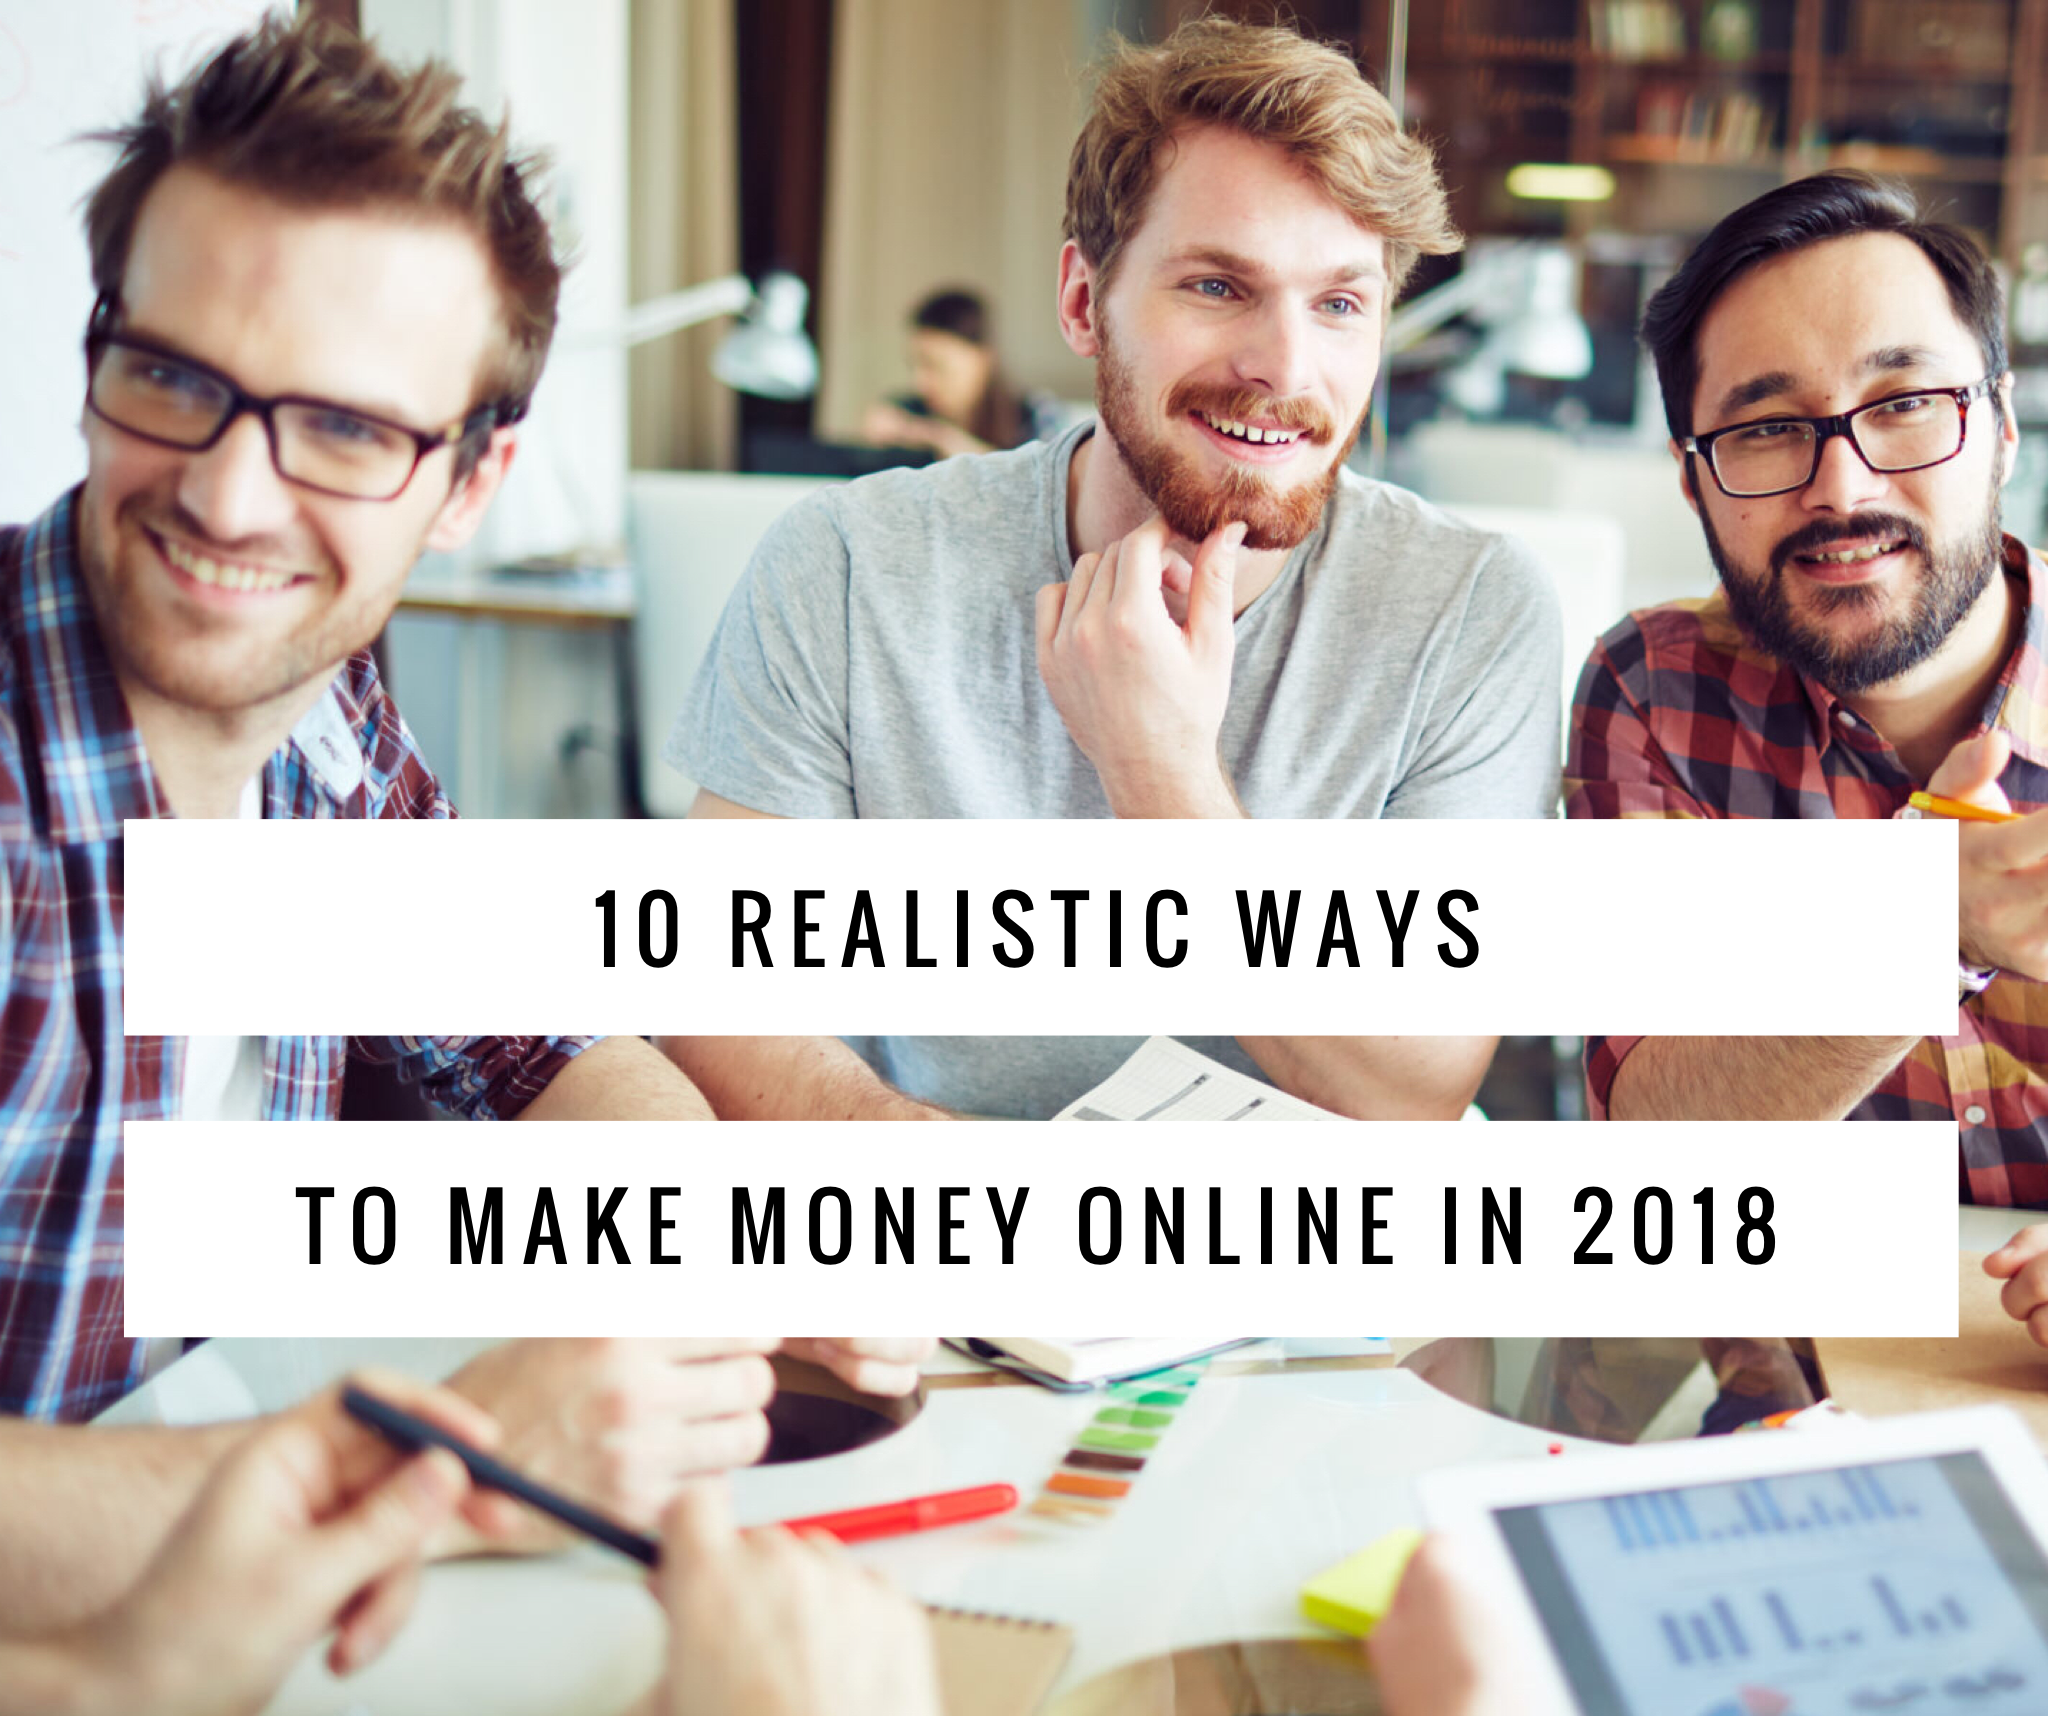 Top 10 Realistic Ways to Make Money Online in 2018